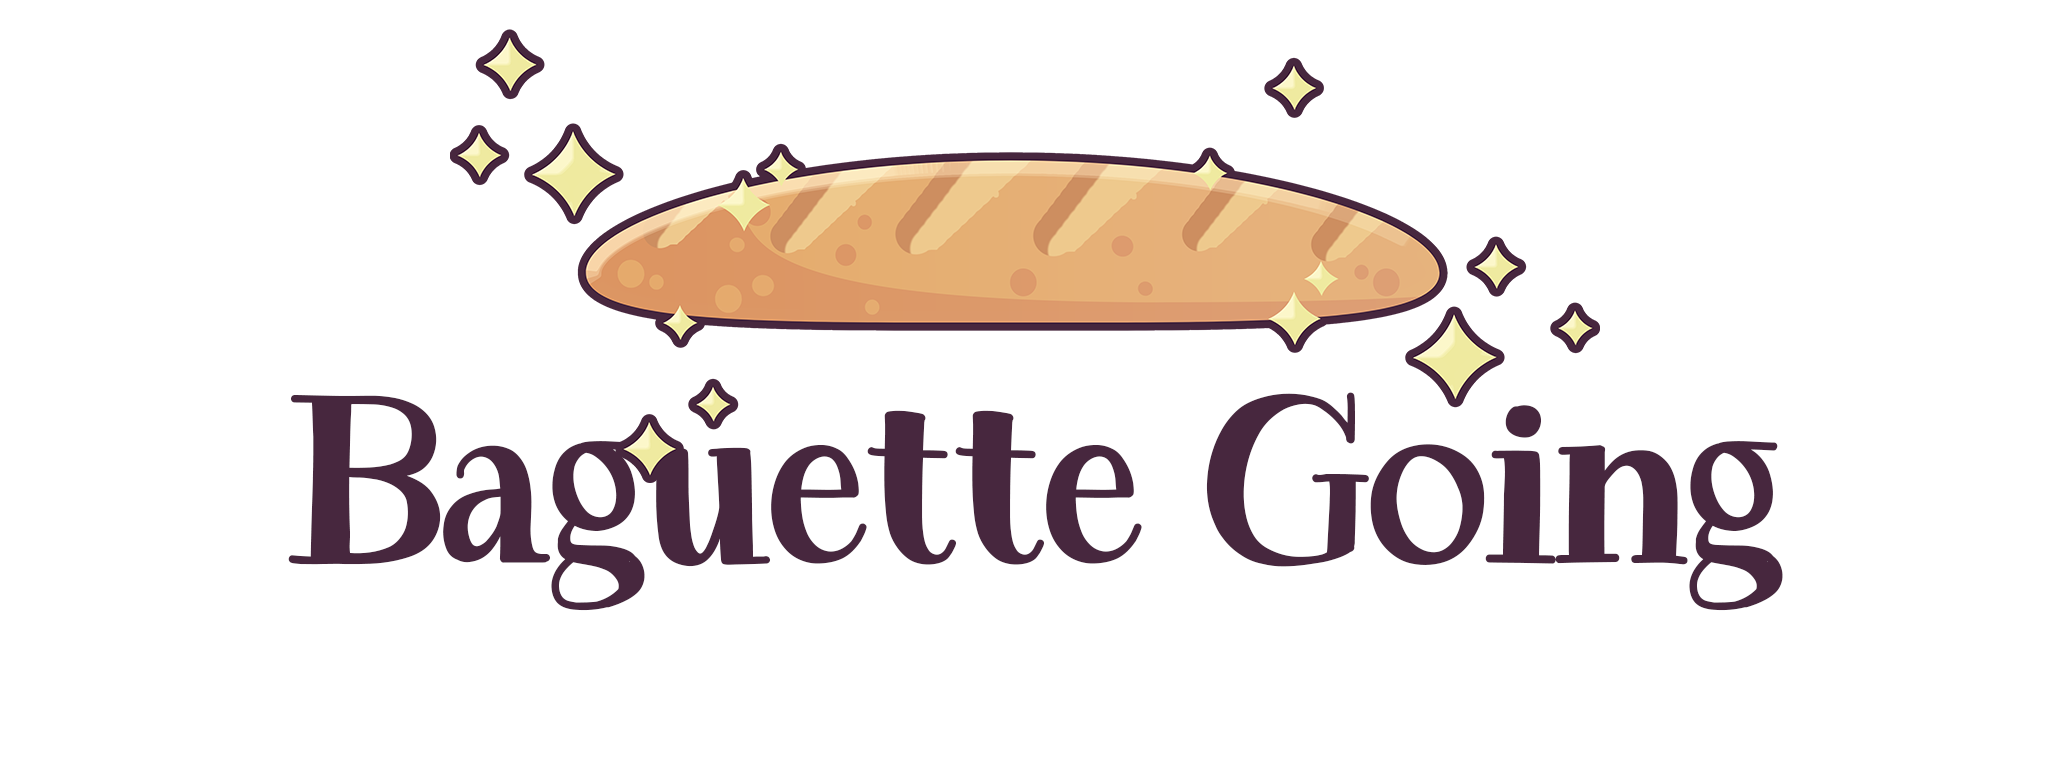 Baguette Going